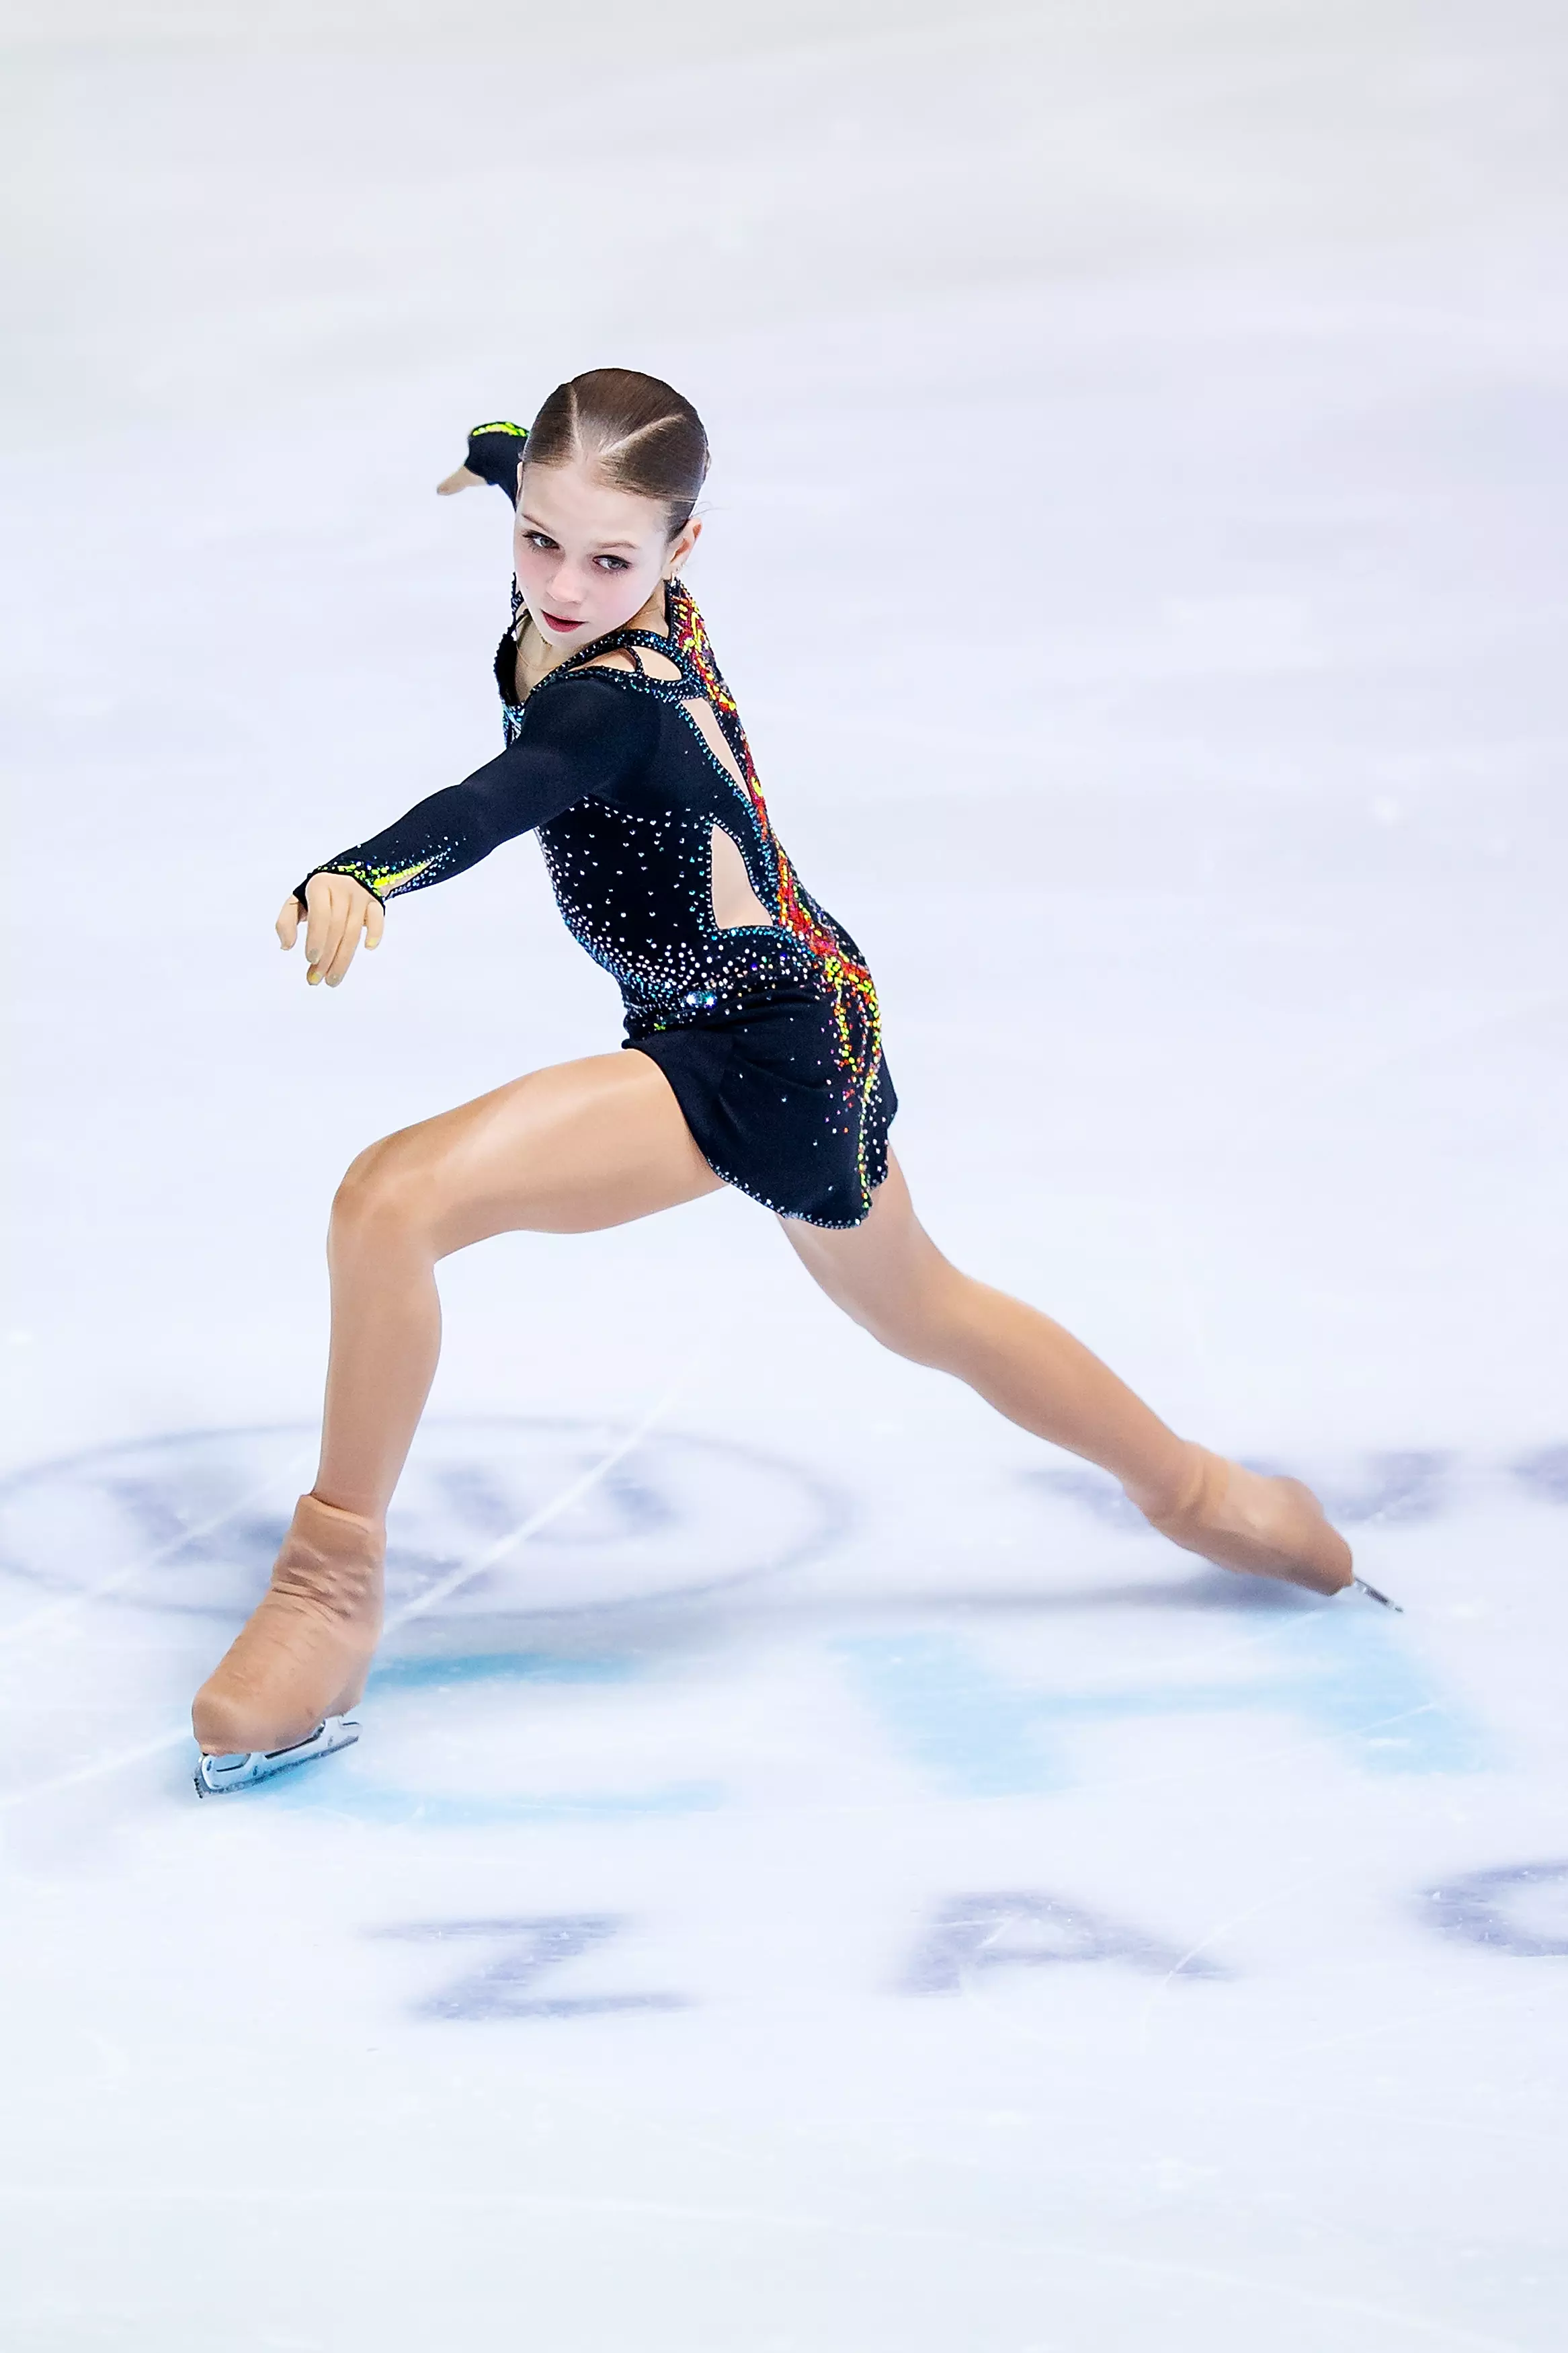 Alexandra Trusova RUS WJFSC 2019 International Skating Union ISU 1134501069